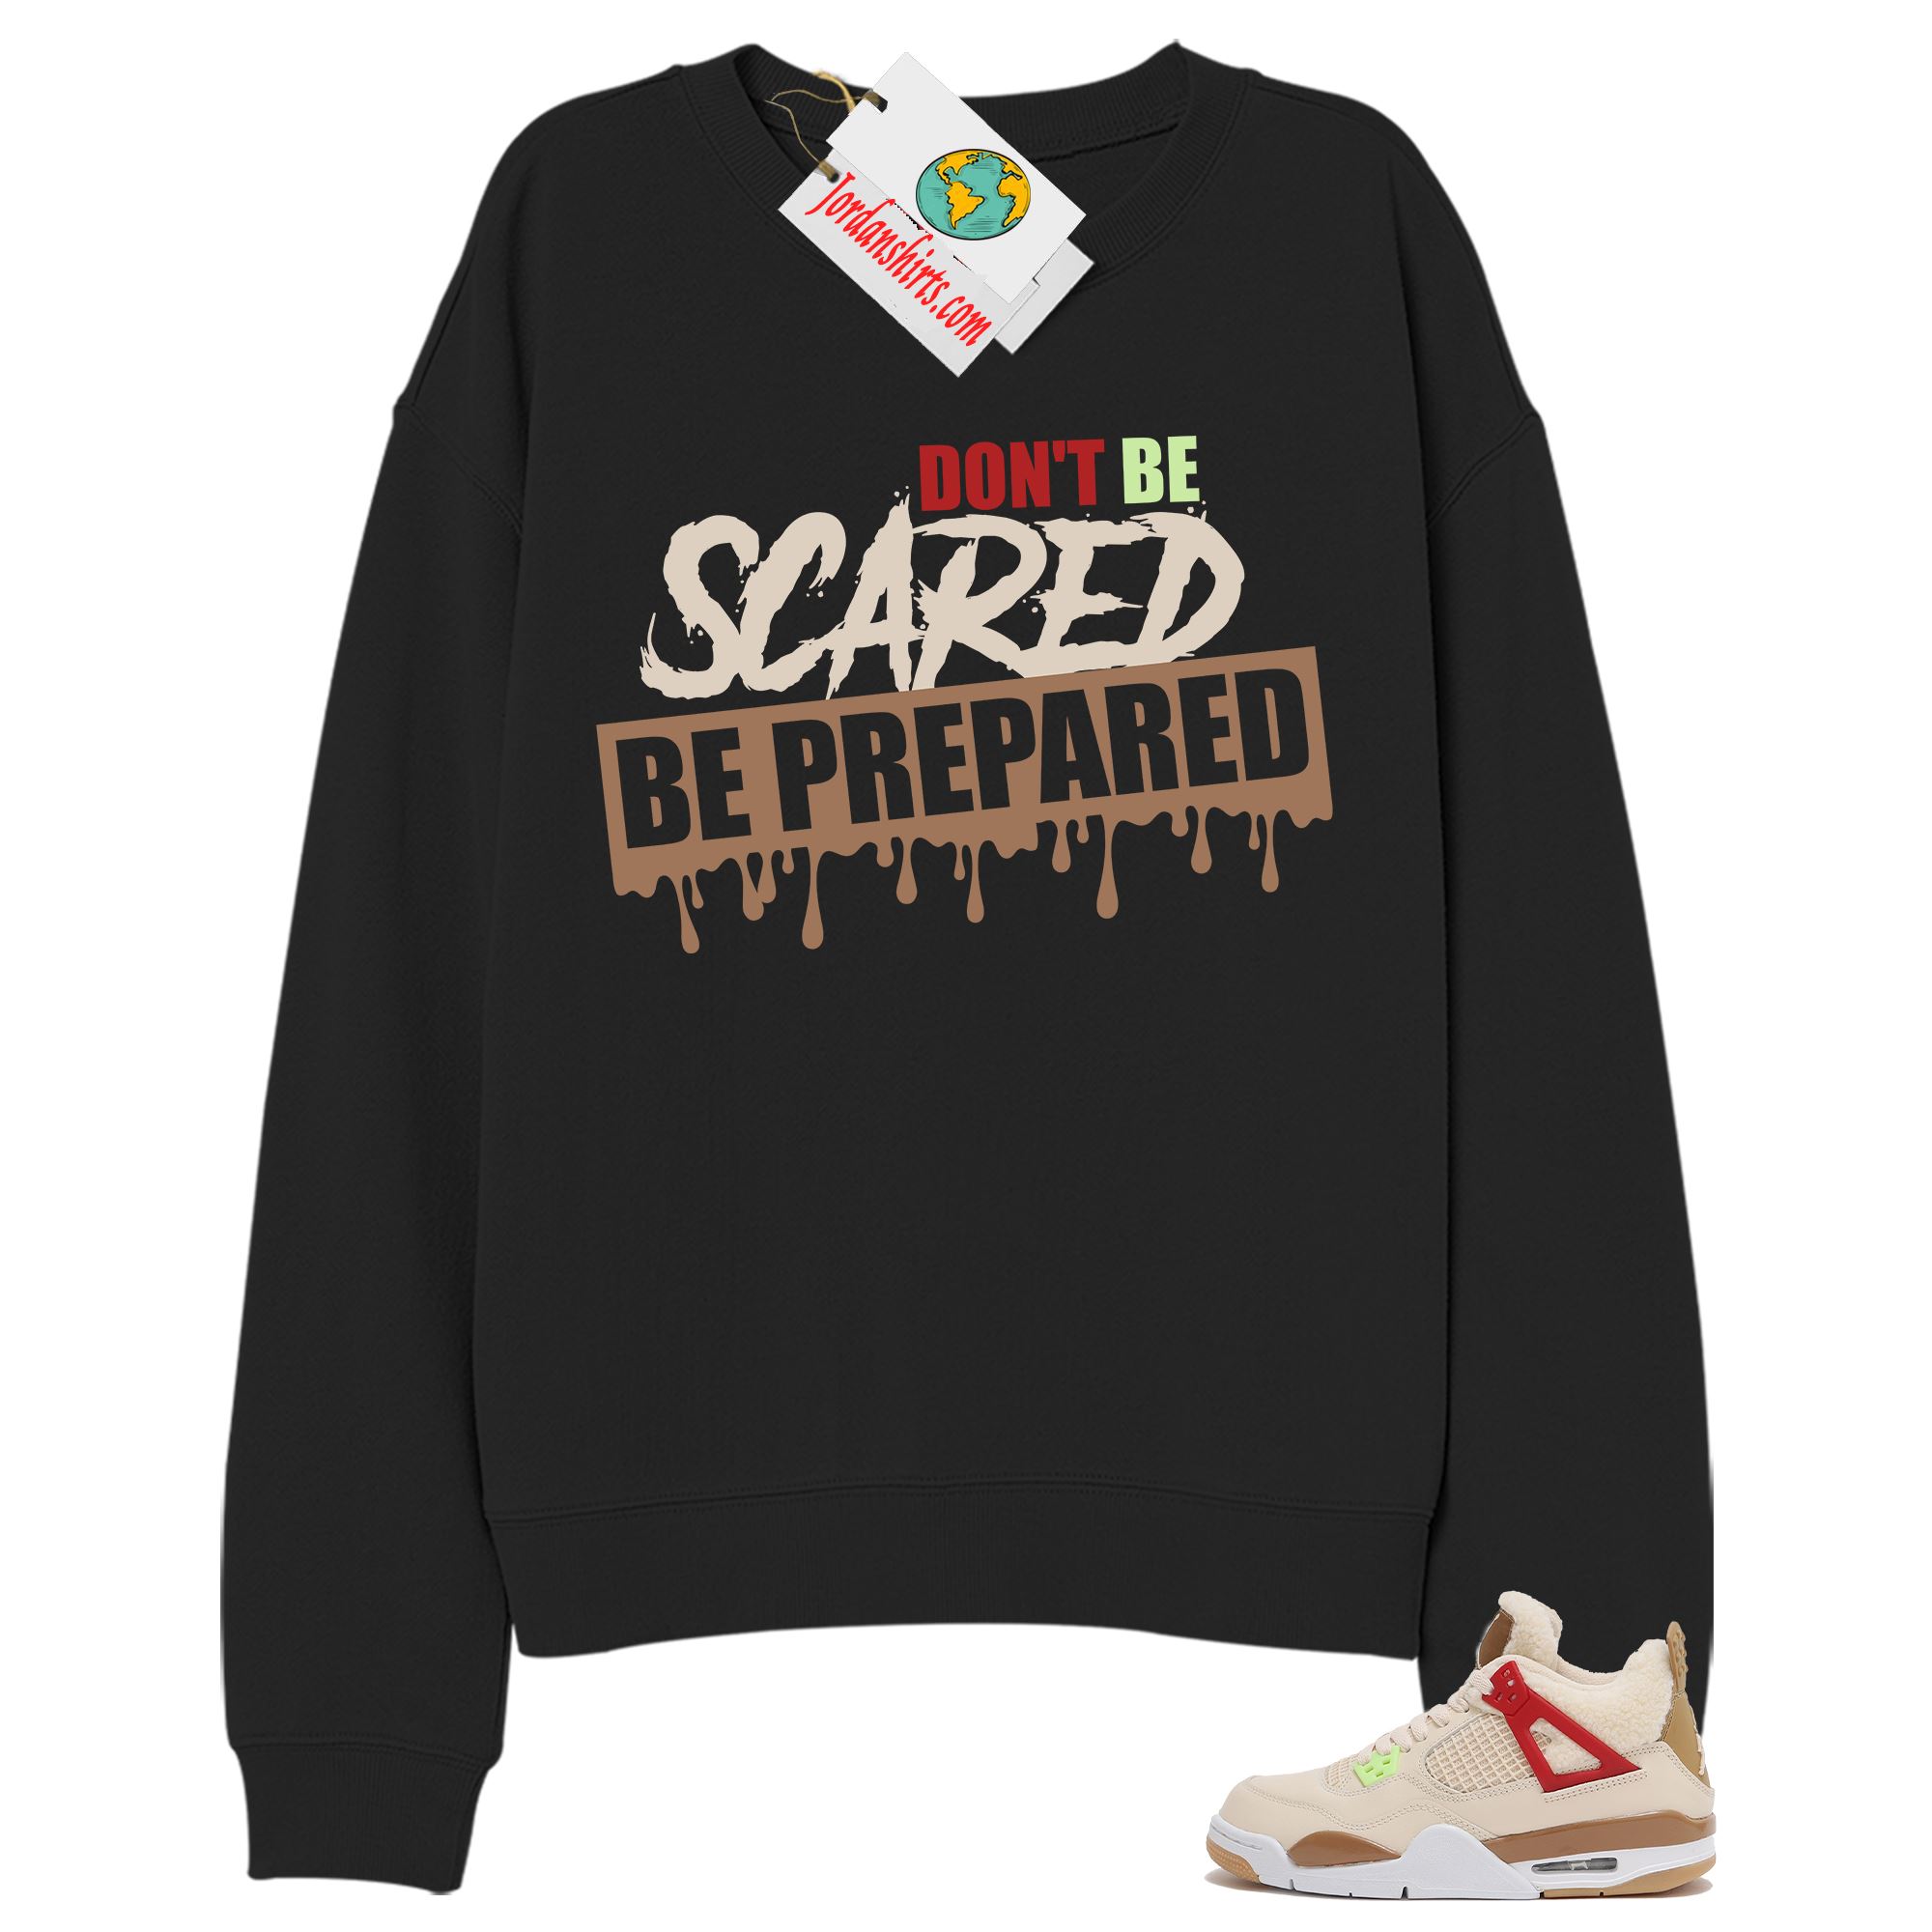 Jordan 4 Sweatshirt, Dont Be Scared Be Prepared Black Sweatshirt Air Jordan 4 Wild Things 4s Plus Size Up To 5xl